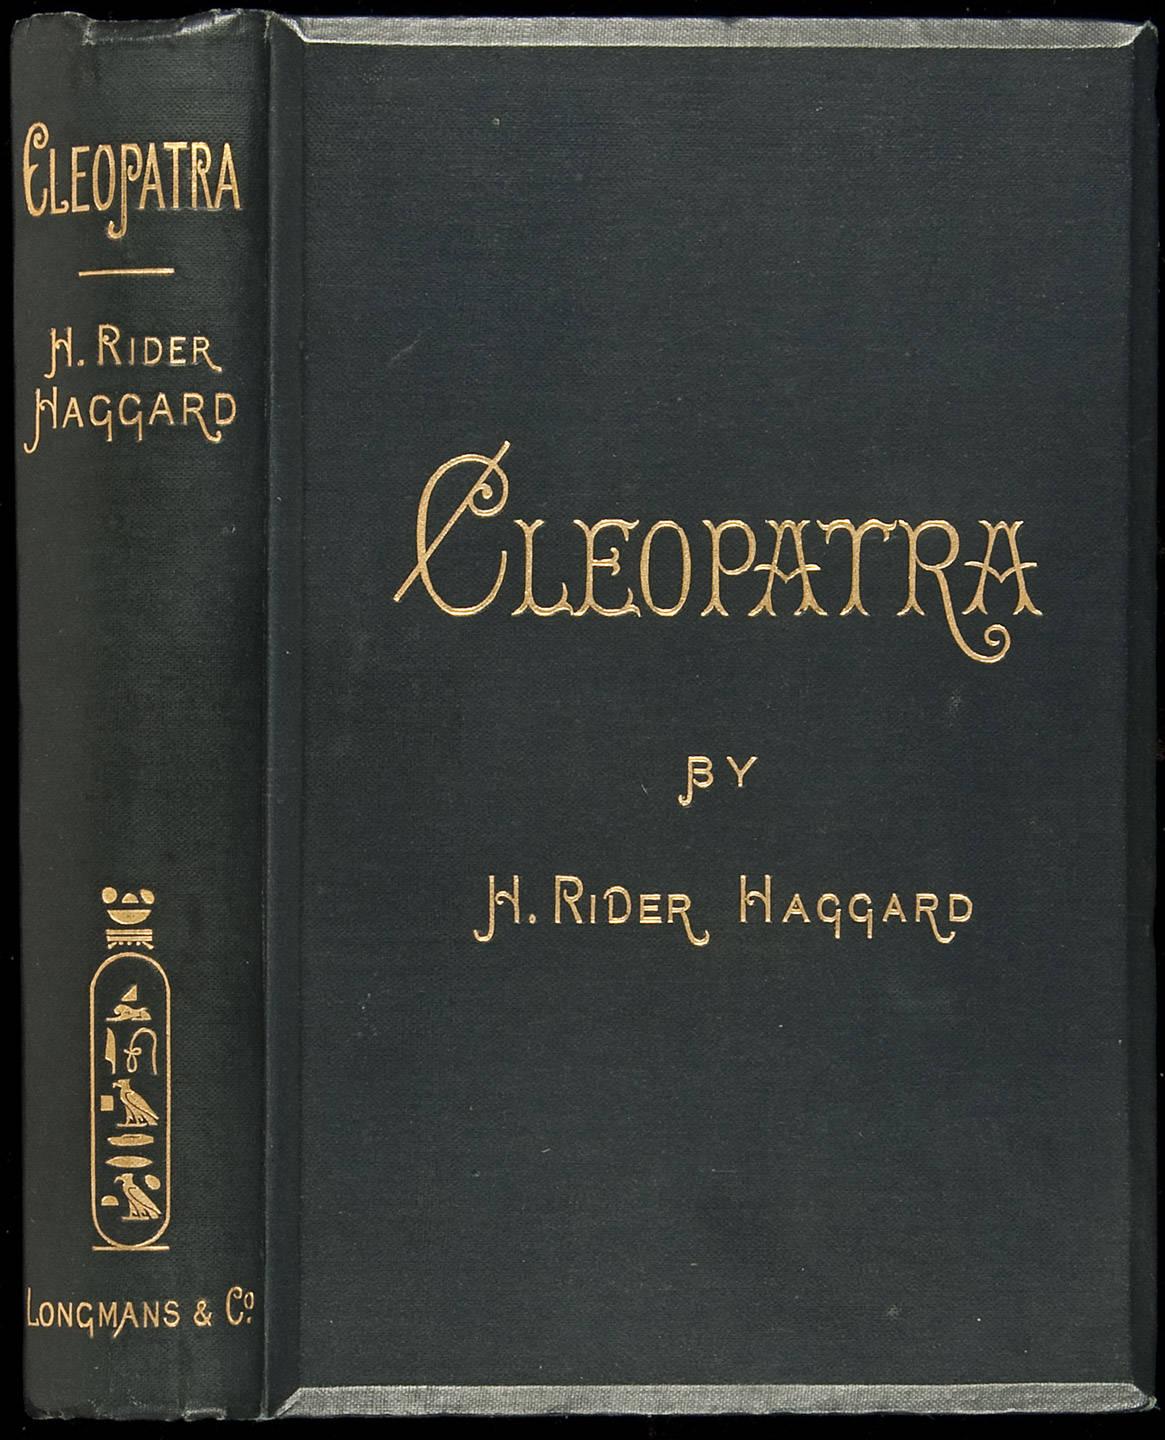 cleopatra by h rider haggard